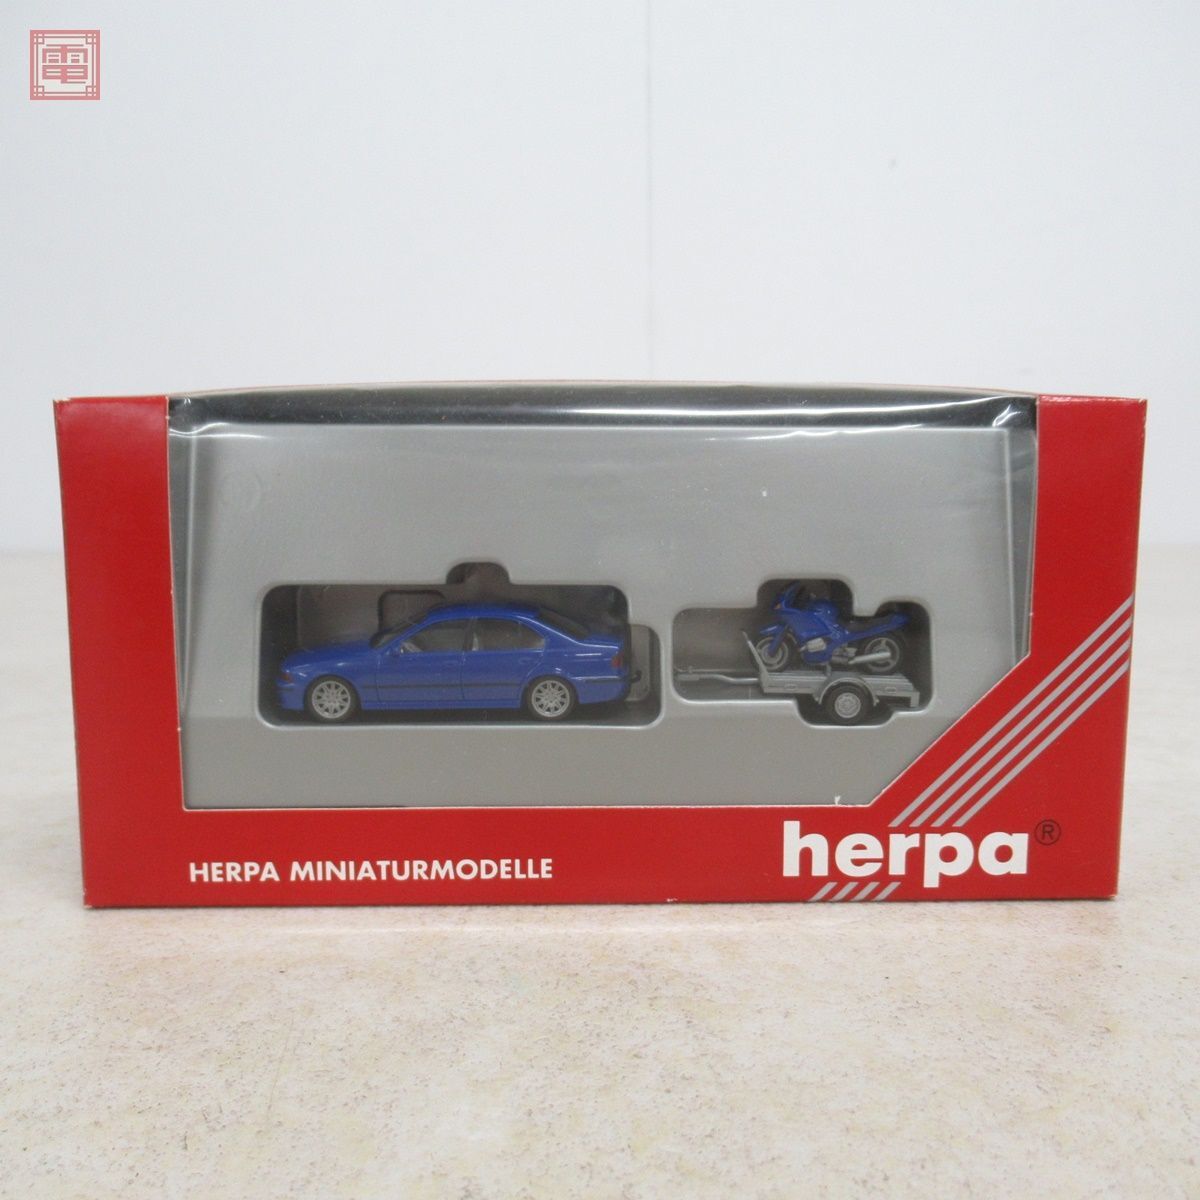  Herpa 1/87 мобильный кран / полуприцеп /BMW/ Mini Cooper / Peugeot 406 и т.п. совместно 22 шт. комплект herpa[20